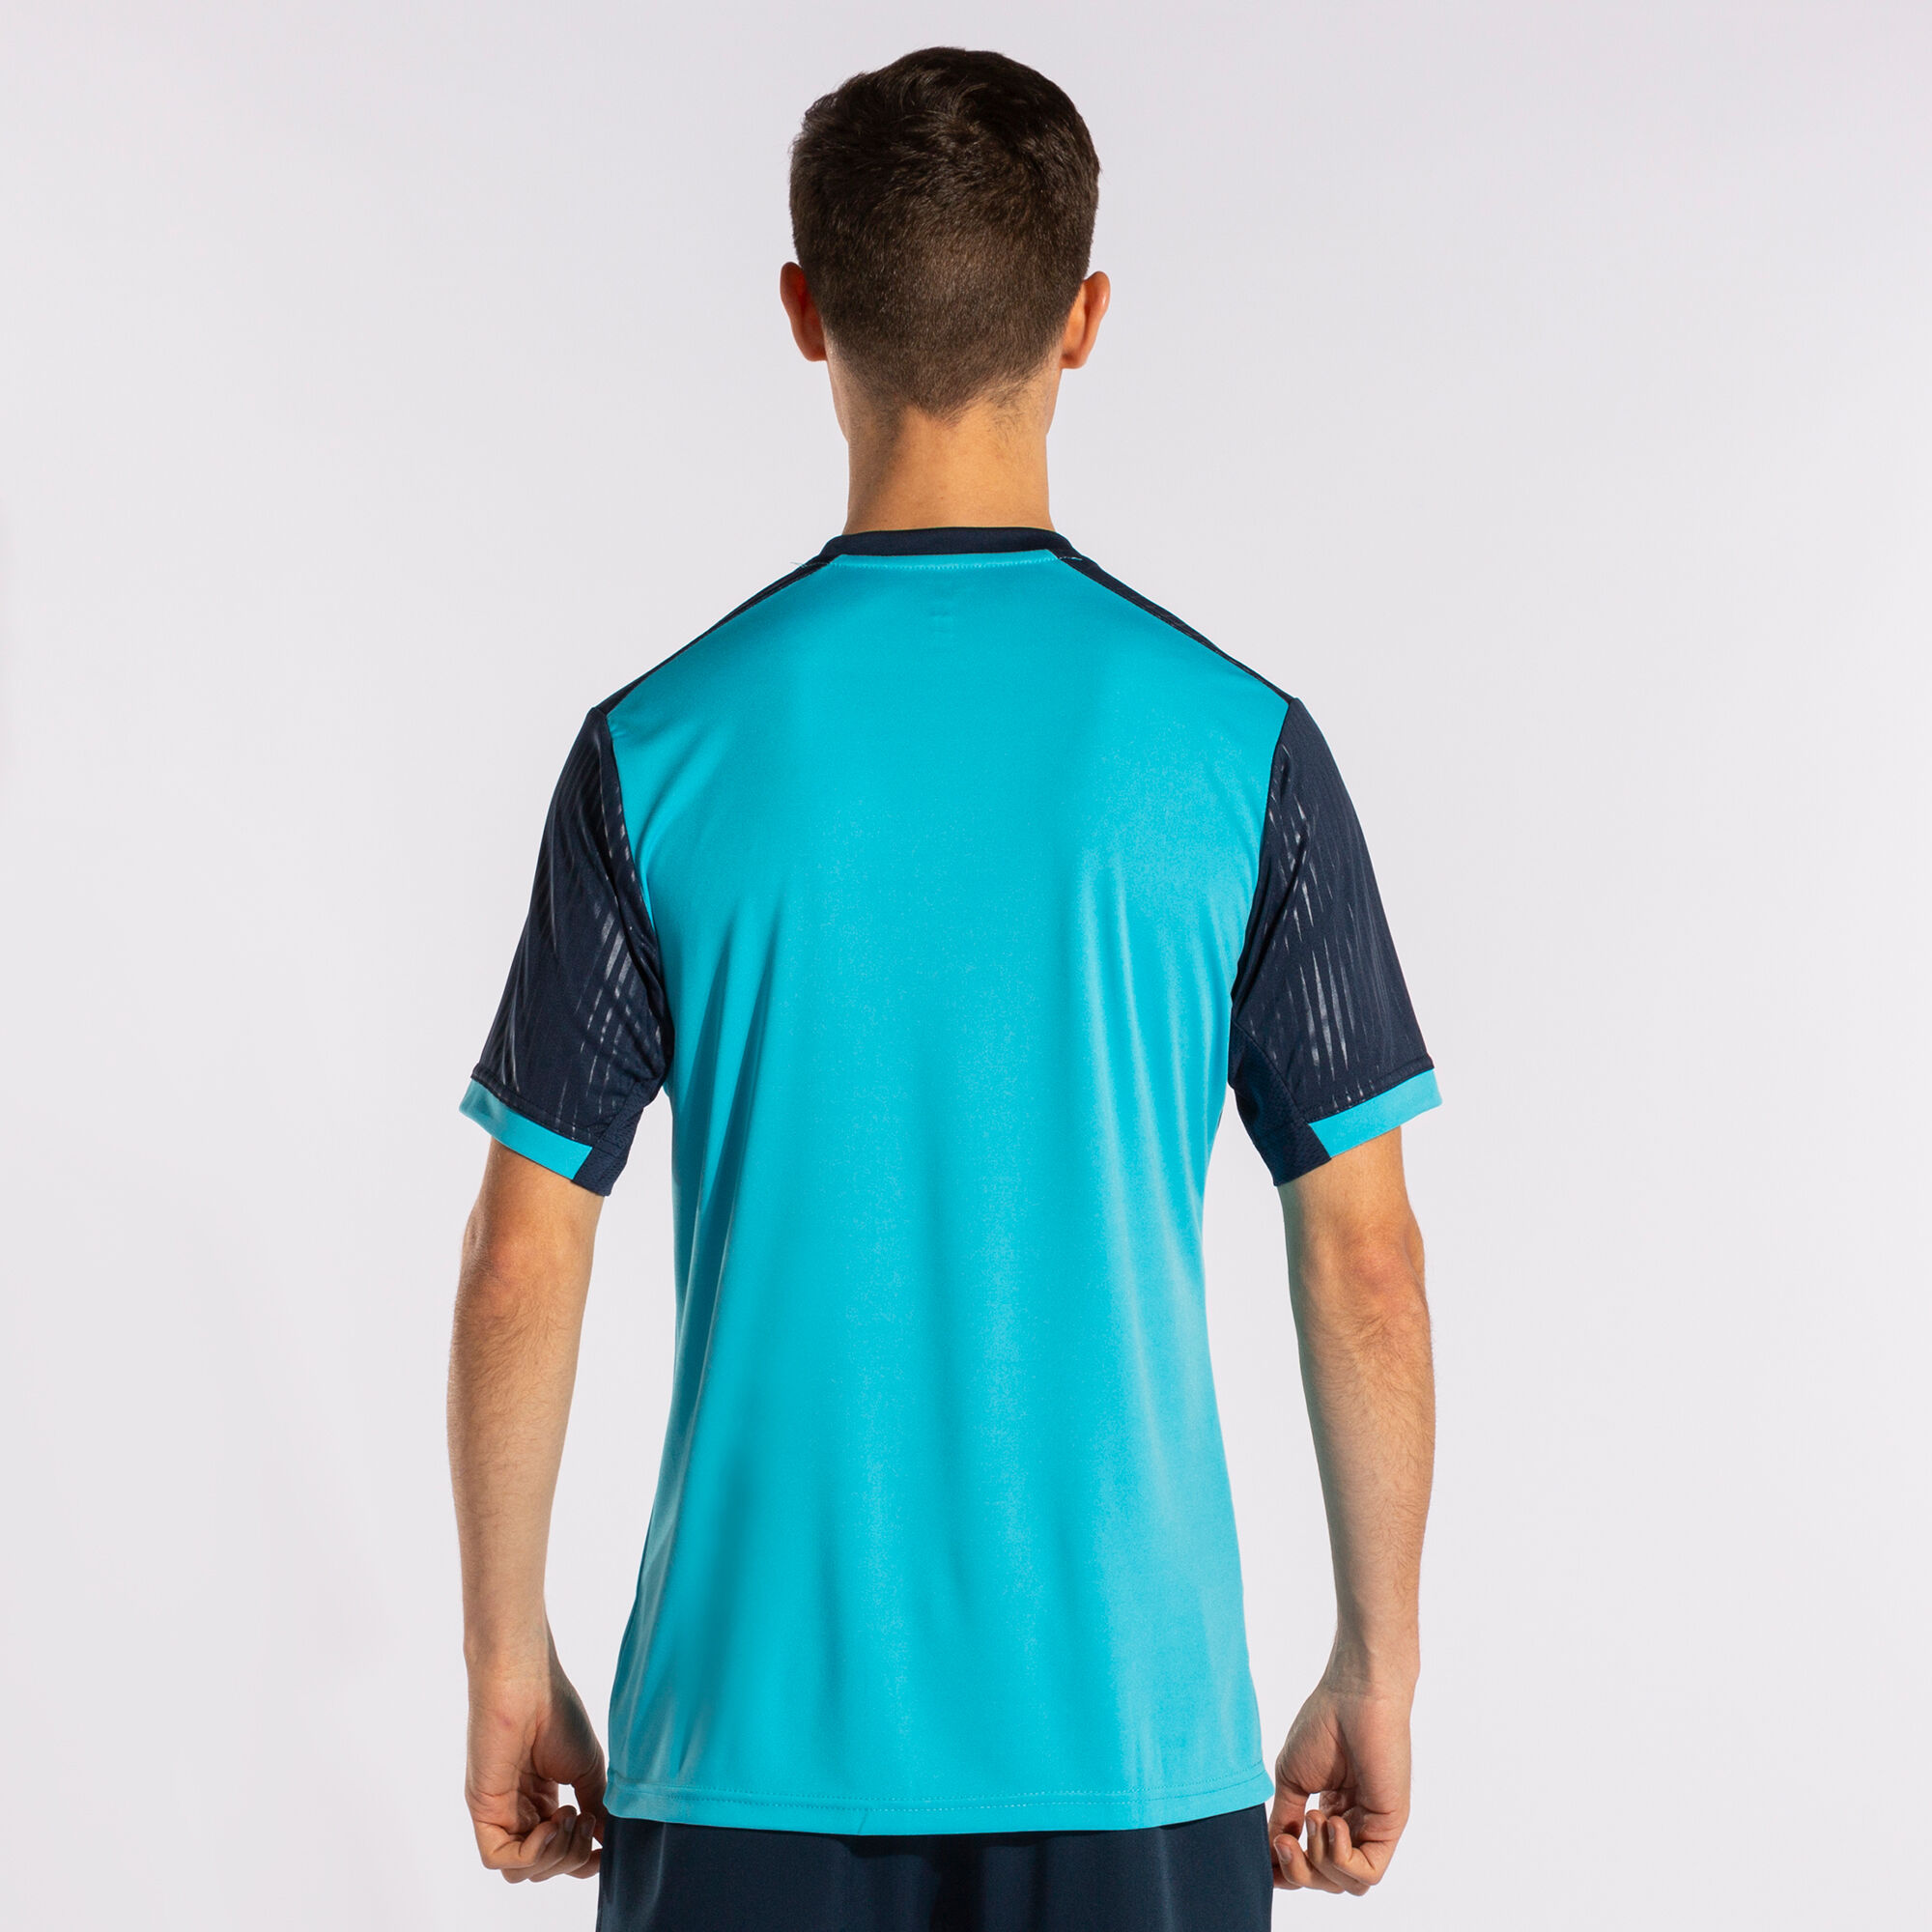 Shirt short sleeve man Montreal fluorescent turquoise navy blue